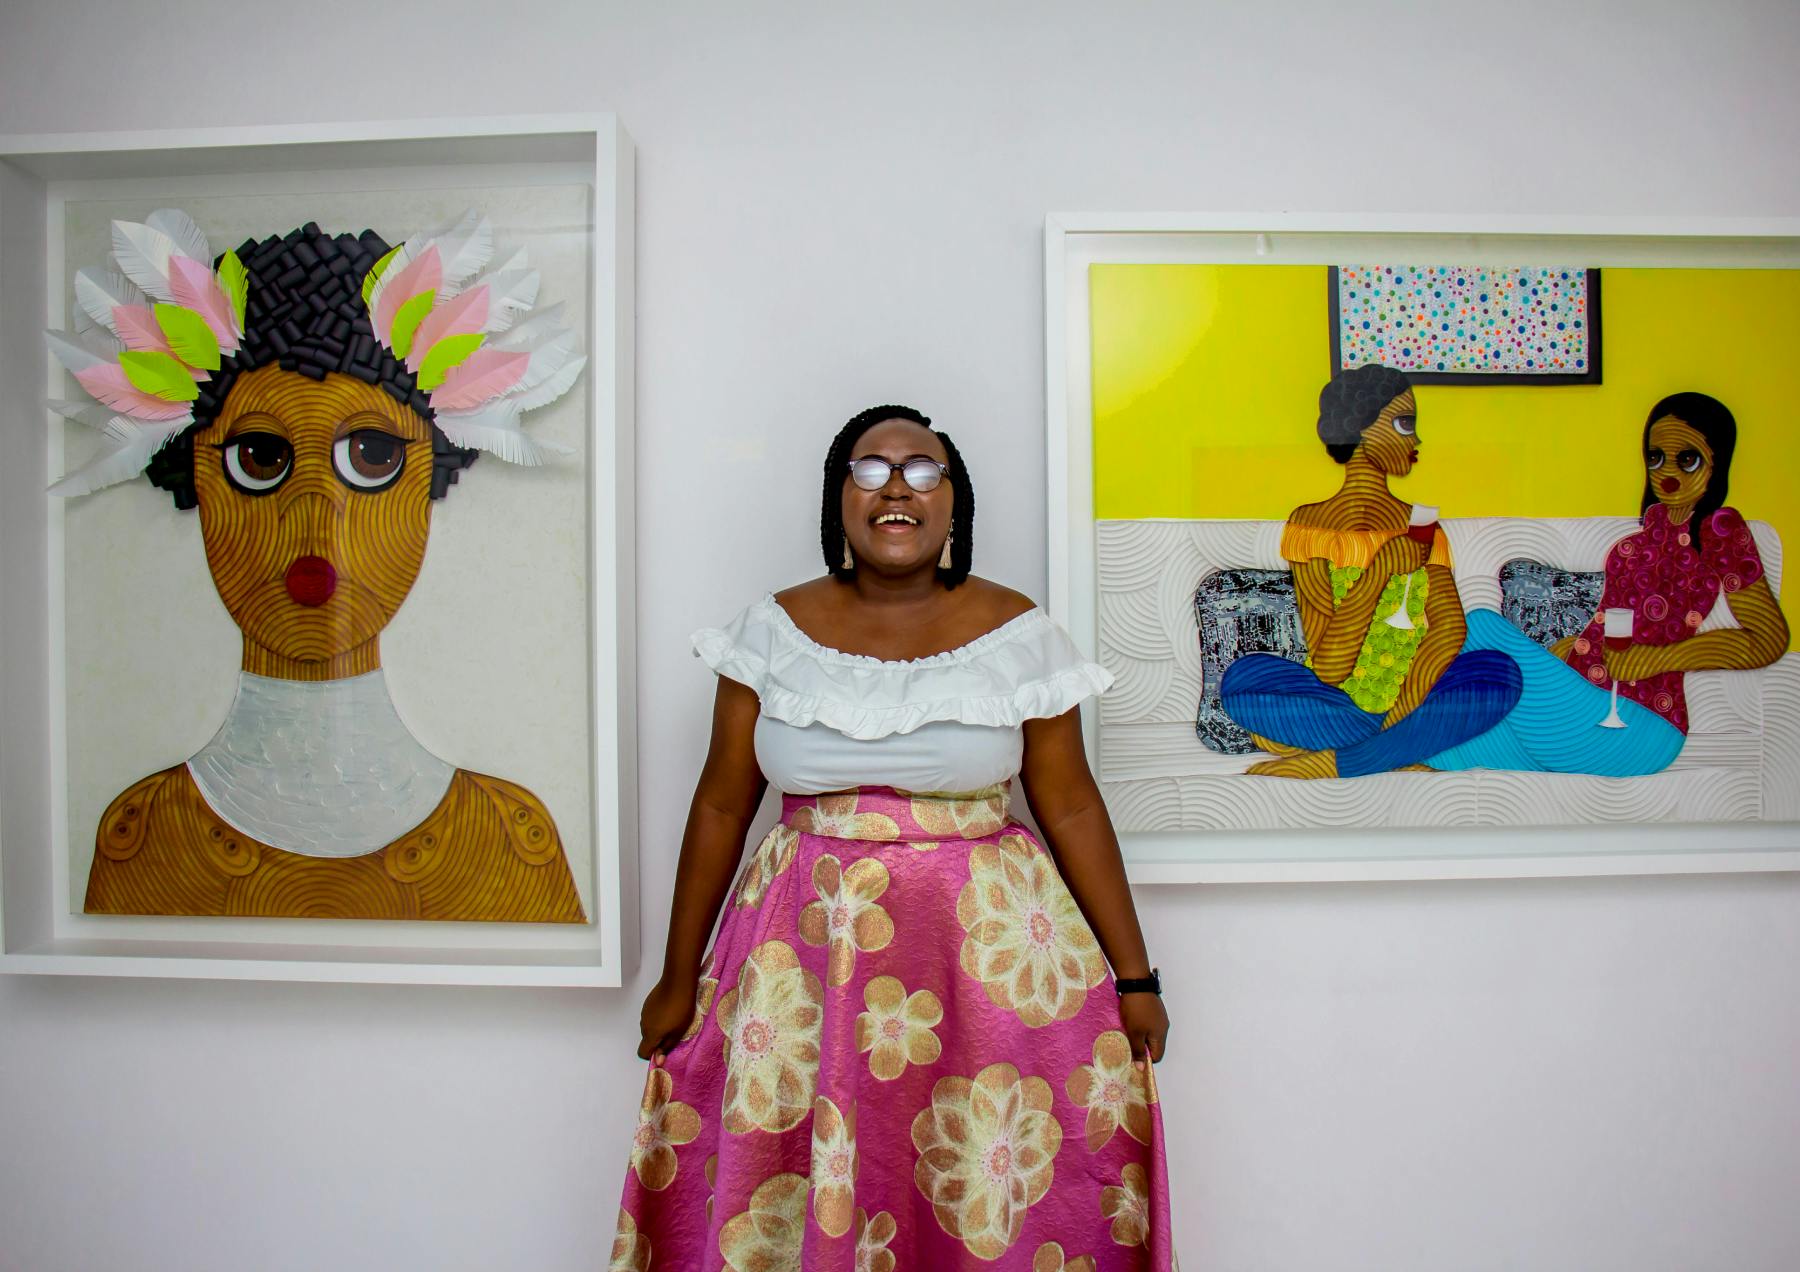 Ayobola Kekere-Ekun, the Artist